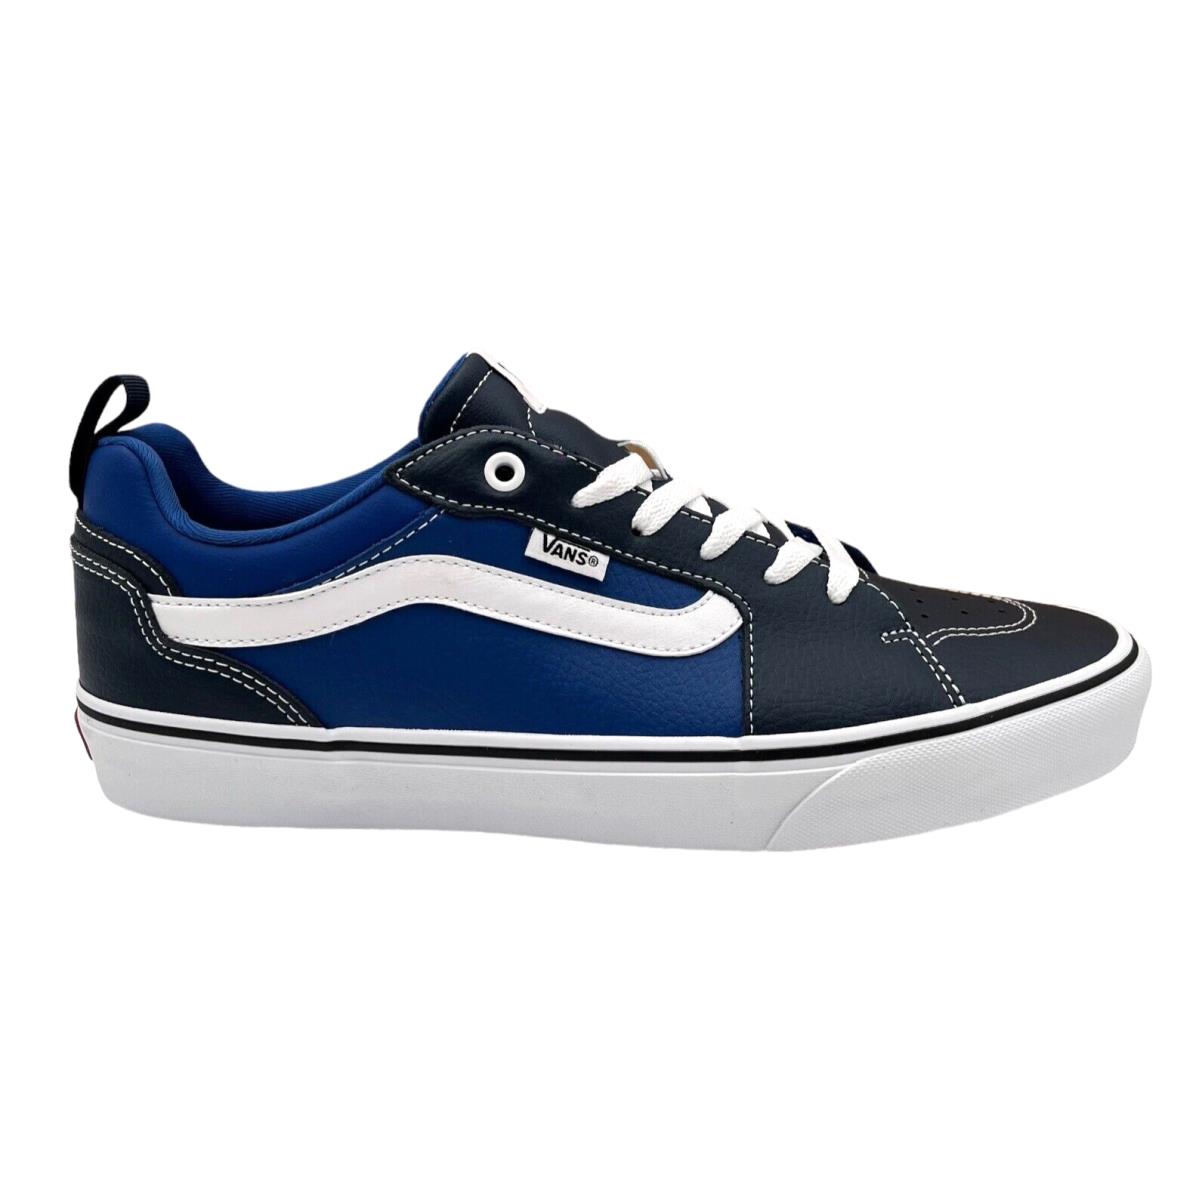 Vans Filmore Men`s Casual Leather Sneaker Size 11 Navy -royal Blue Lace up Shoes